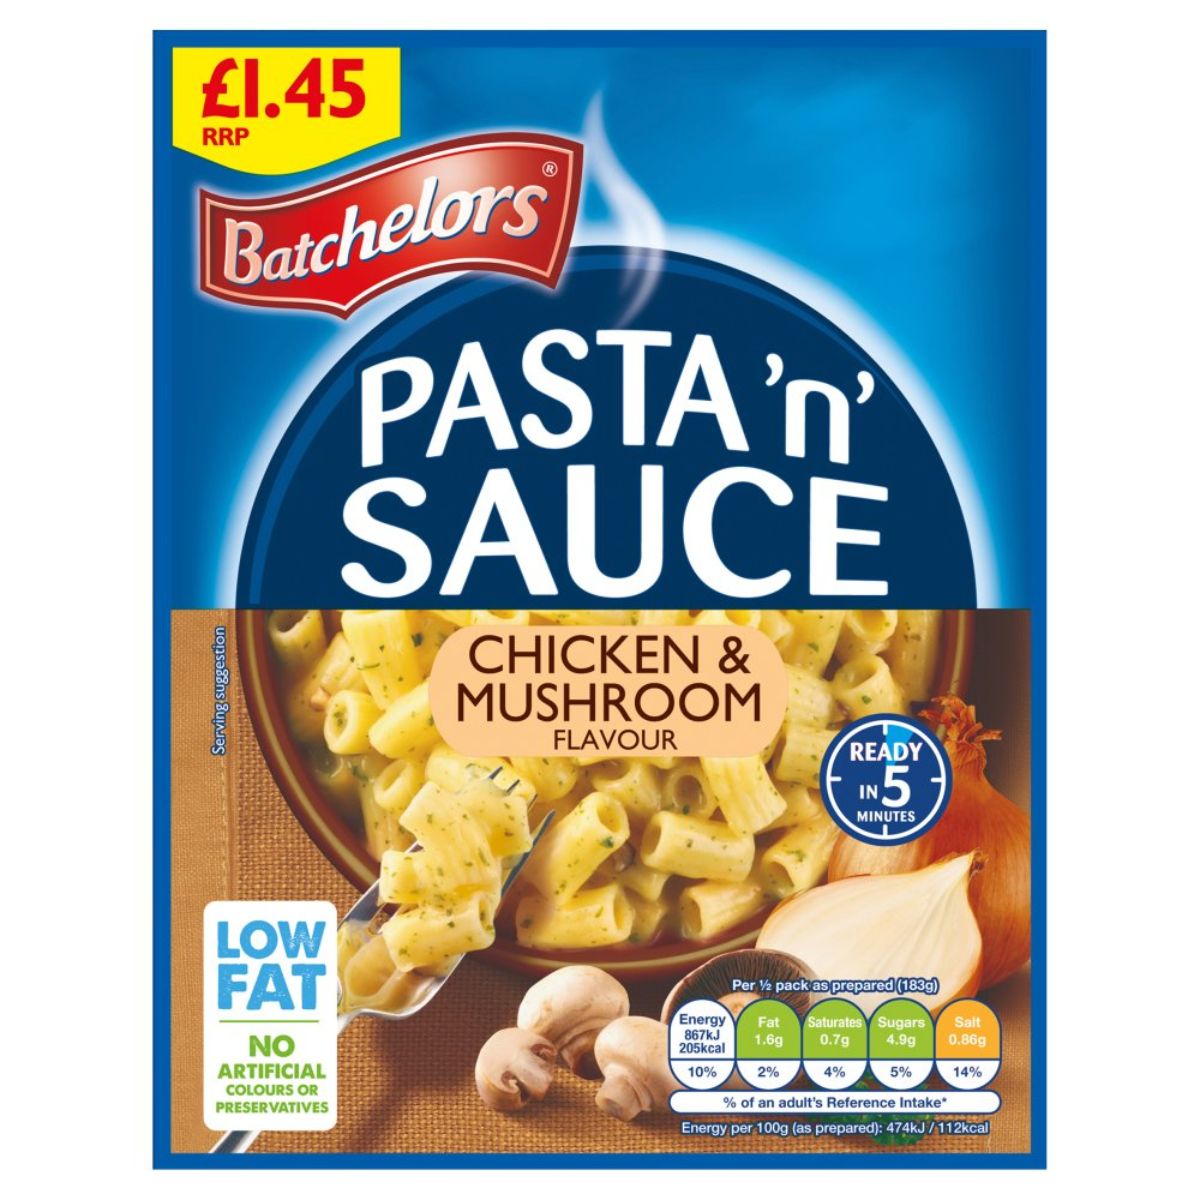 Batchelors - Pasta n Sauce Chicken & Mushroom Flavour - 99g pasta sauce with chicken and mushrooms.